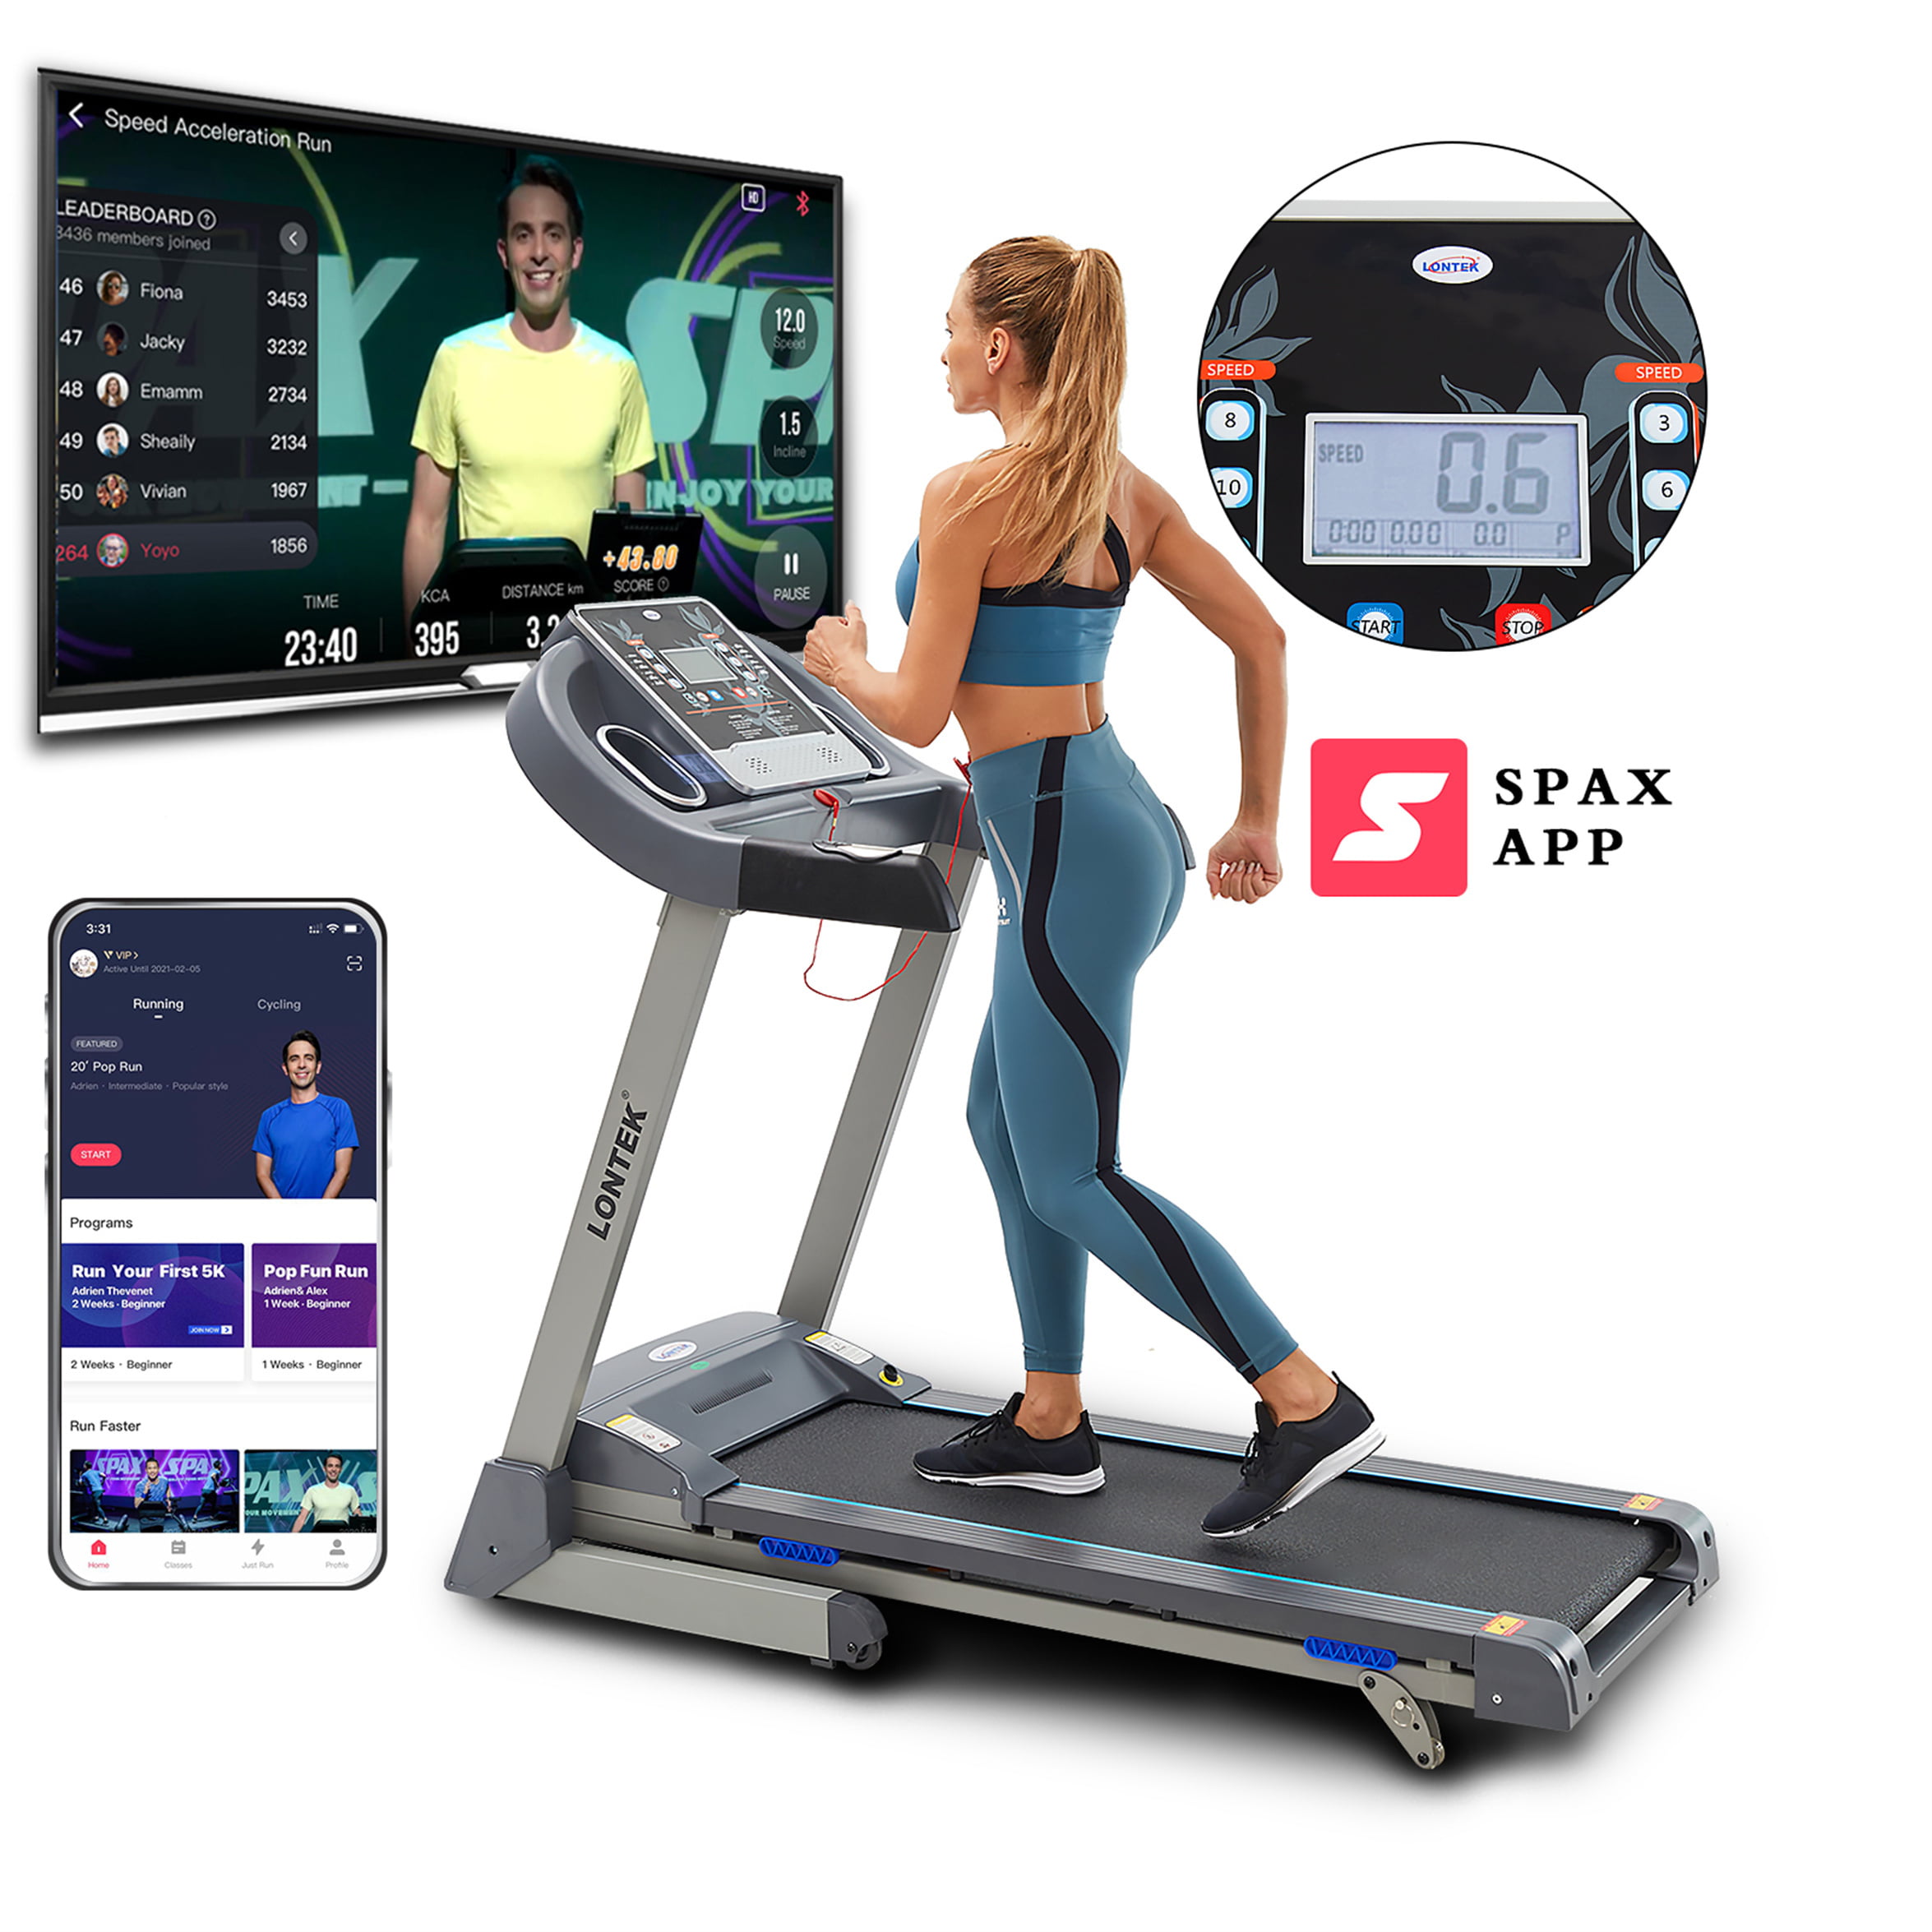 SportSmith Treadmill Walking/Running Belt fits Lifestyler model 297153 